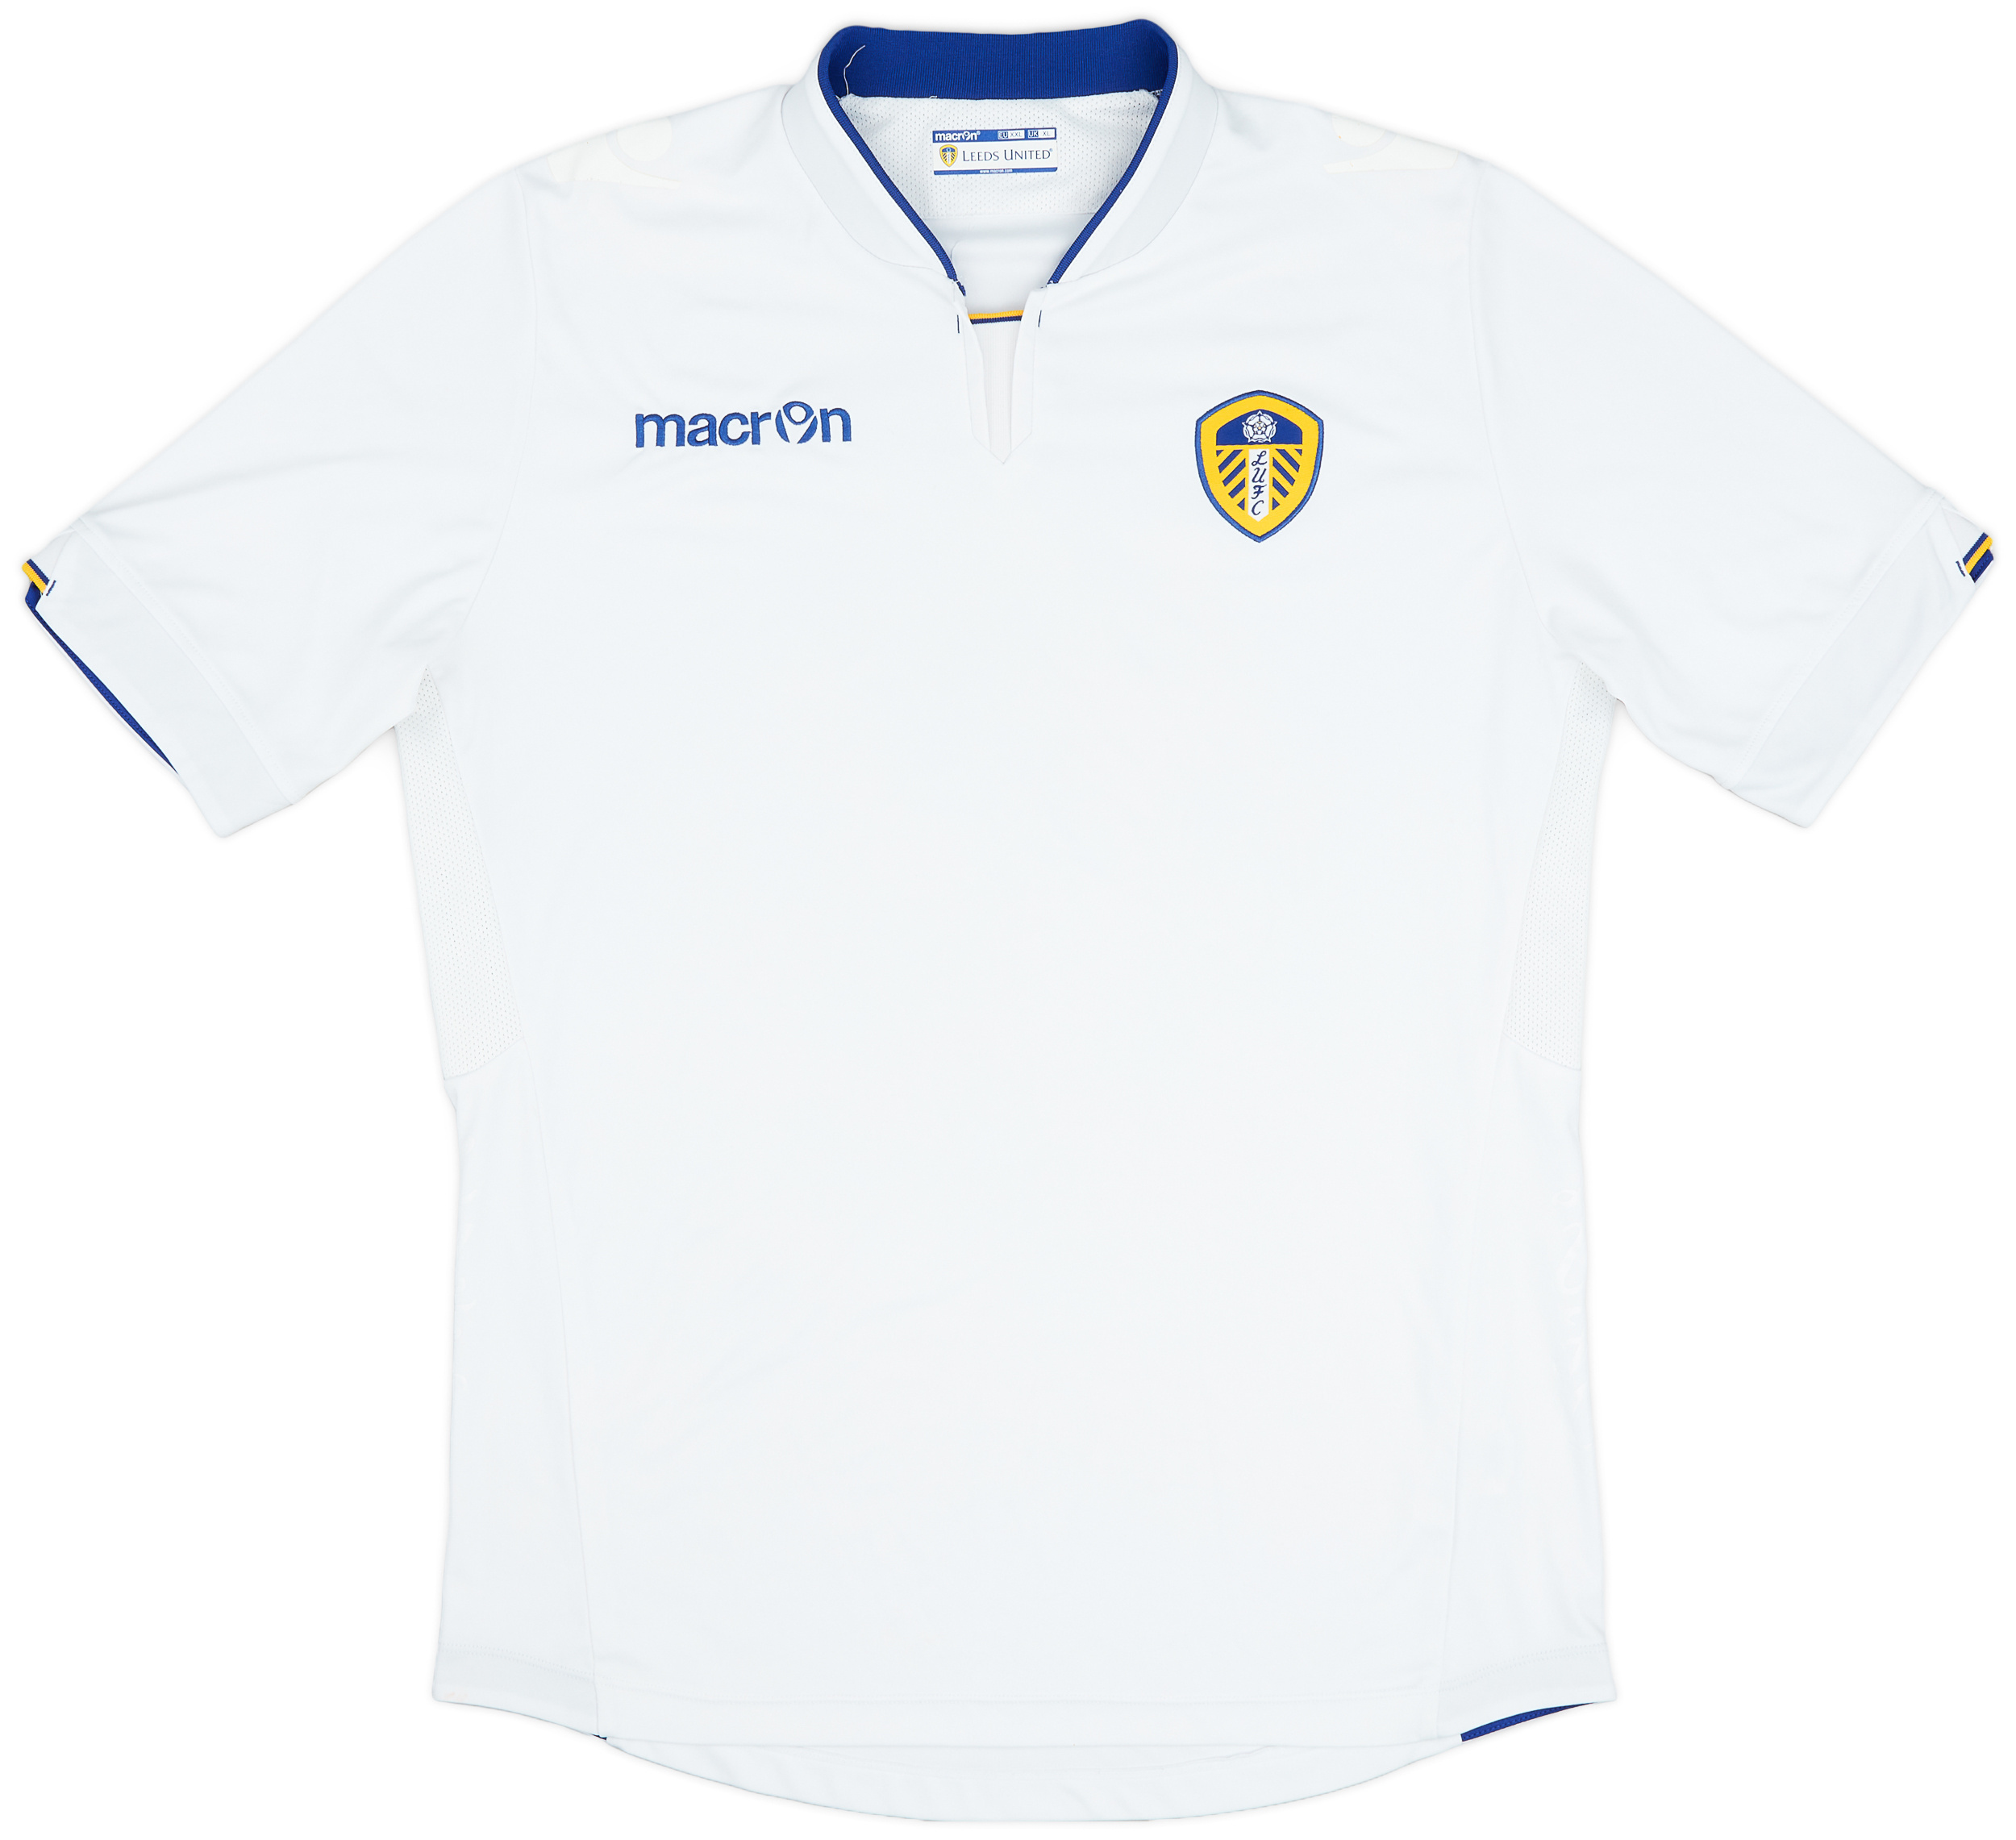 2014-15 Leeds United Home Shirt - 6/10 - ()